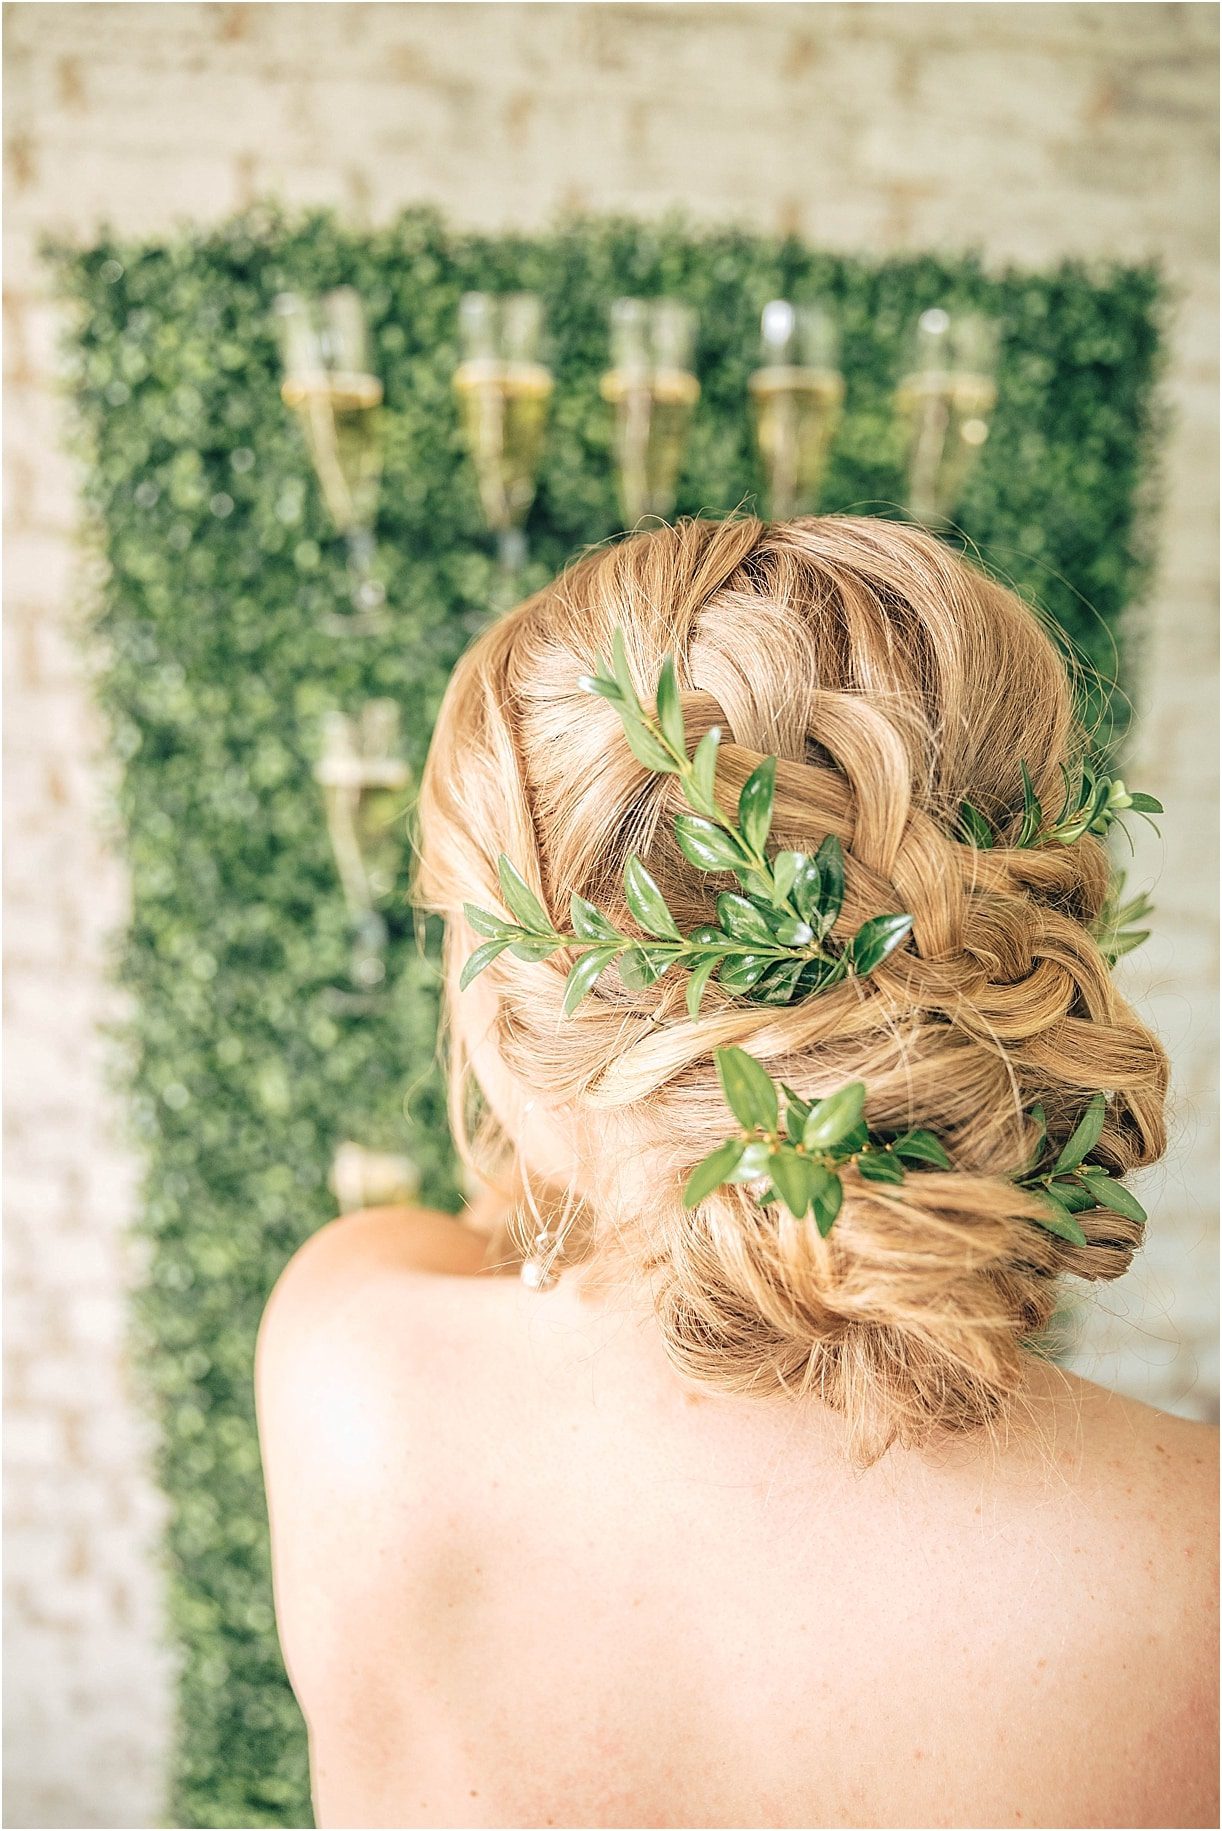 An Intimate Secret Garden Wedding in Virginia | Hill City Bride Virginia Wedding Inspiration Blog Wedding Hair Braided Updo